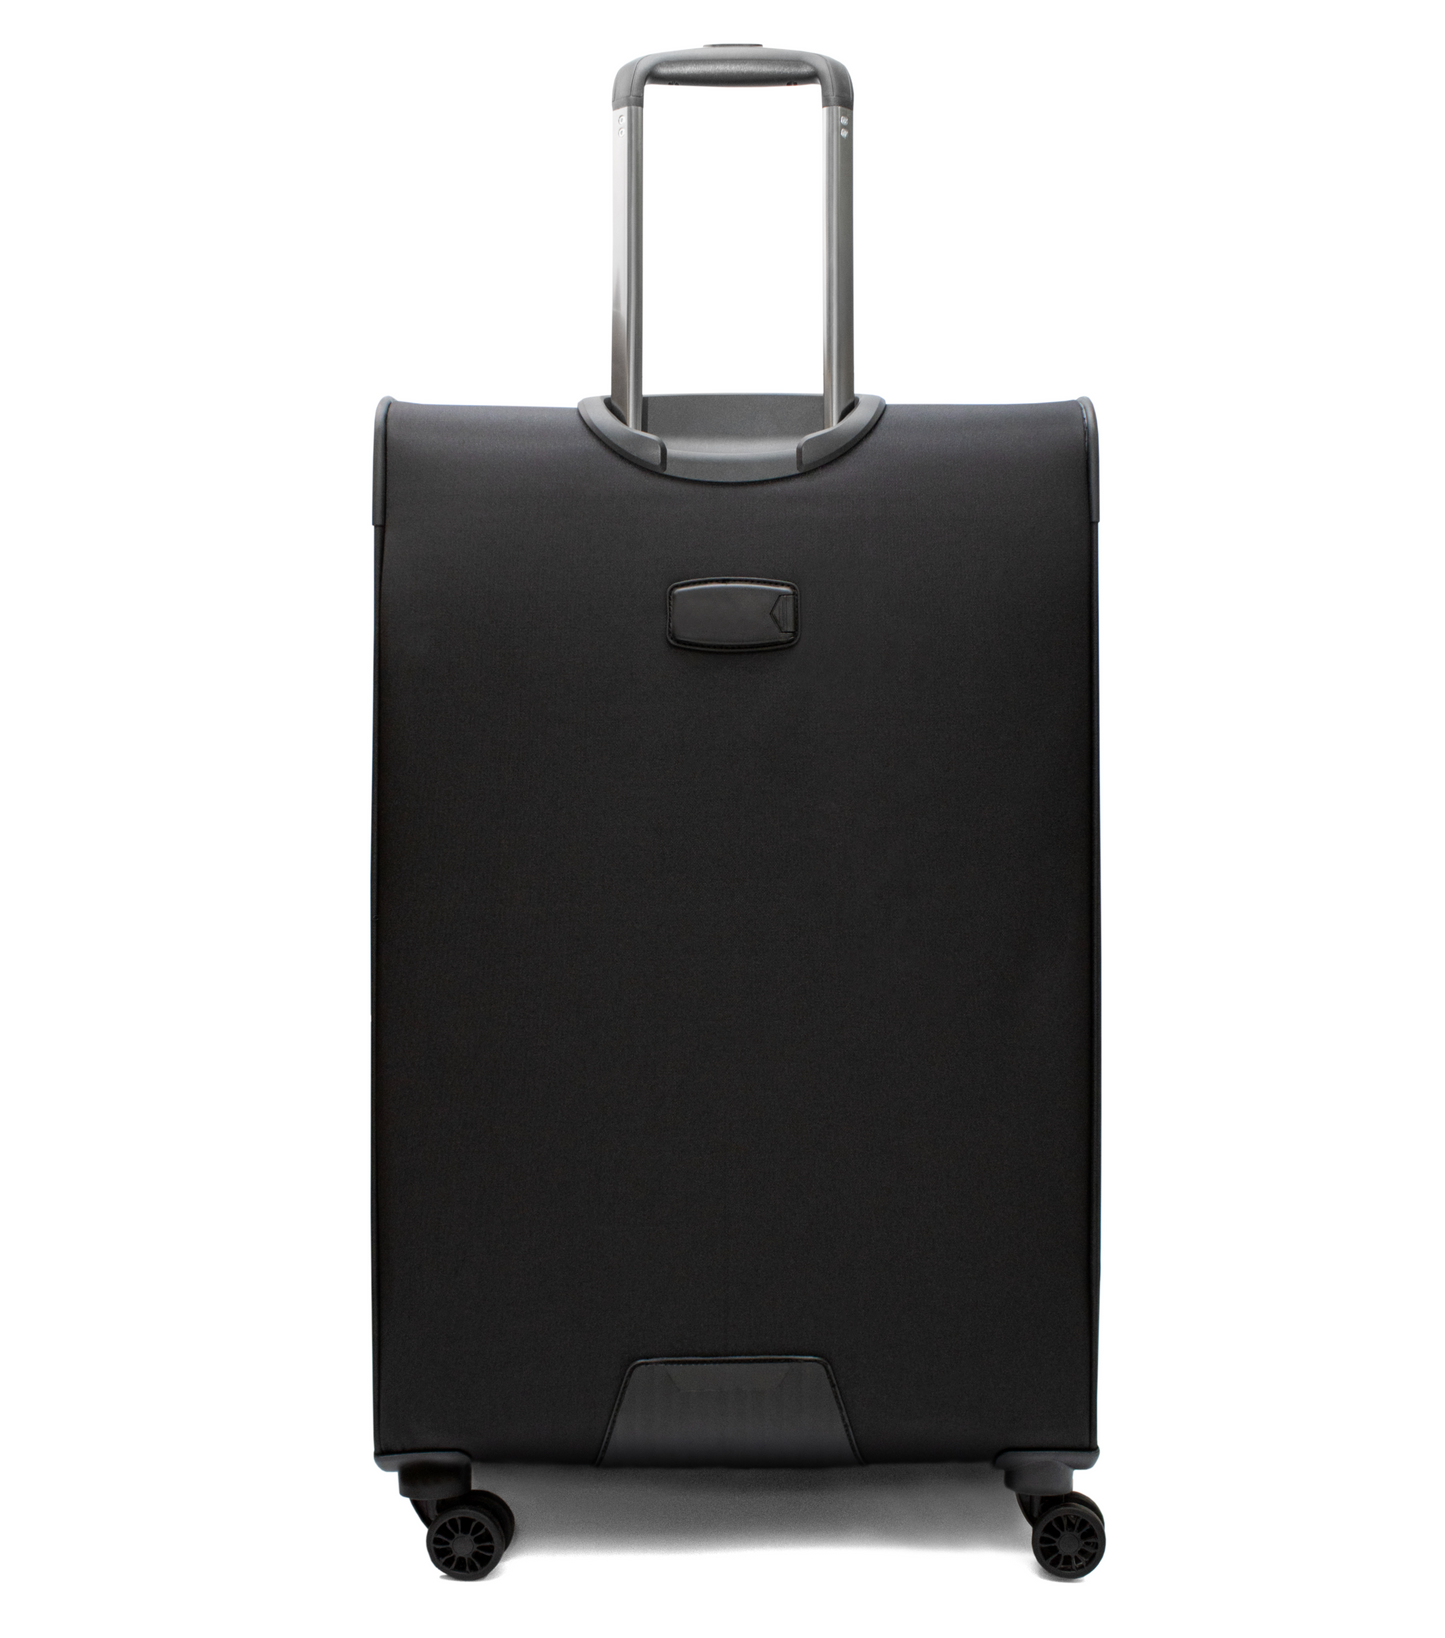 Cavalinho Check-in Softside Luggage (24" or 28") - 28 inch Black - 68020003.01.28_3